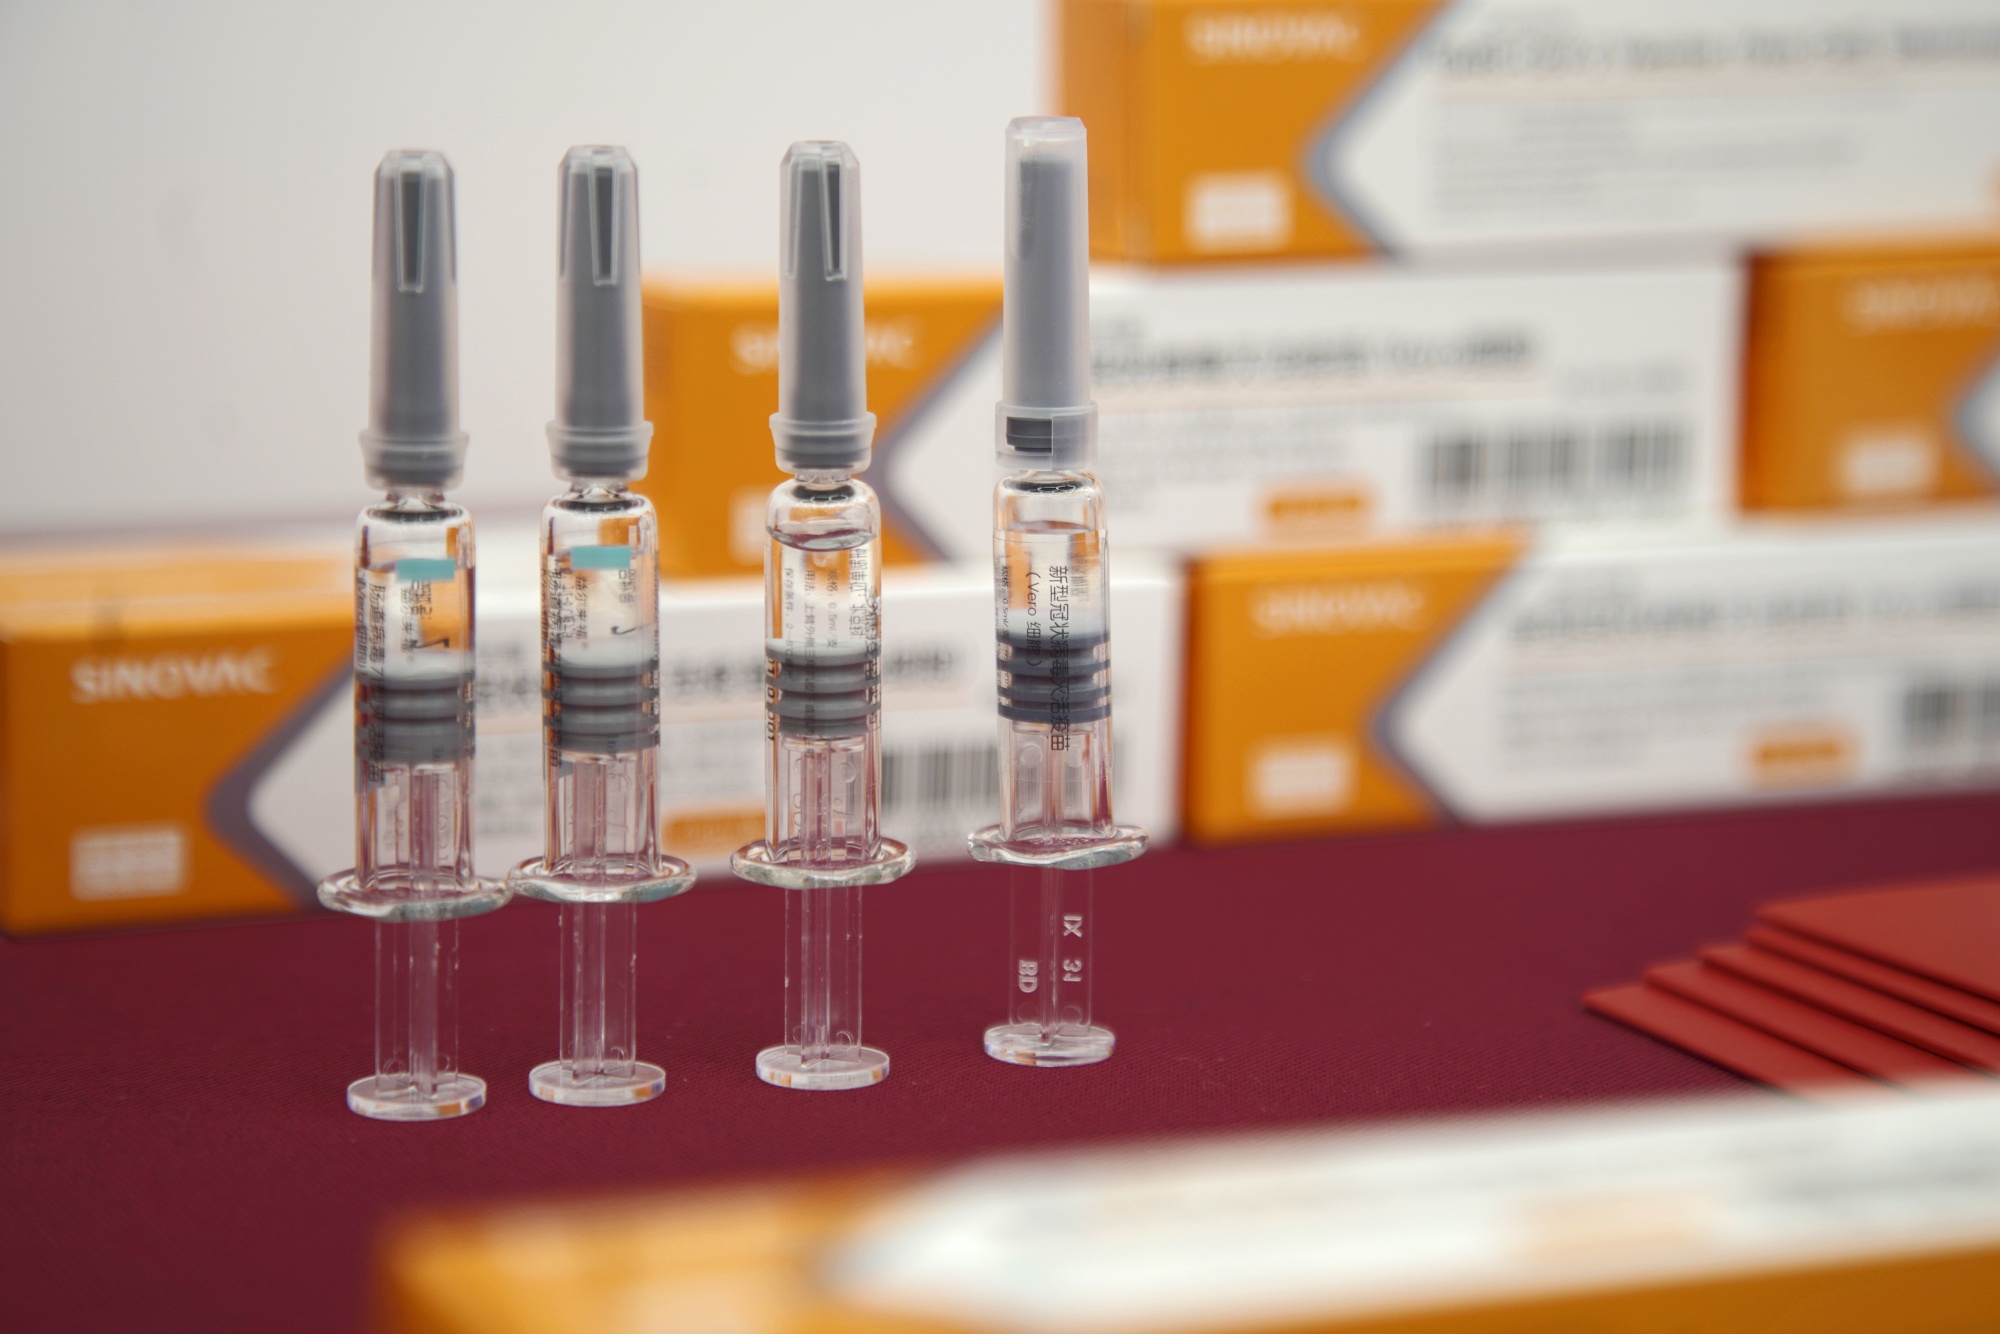 Sinovac&nbsp;Biotech Ltd.'s CoronaVac SARS-CoV-2 vaccine.